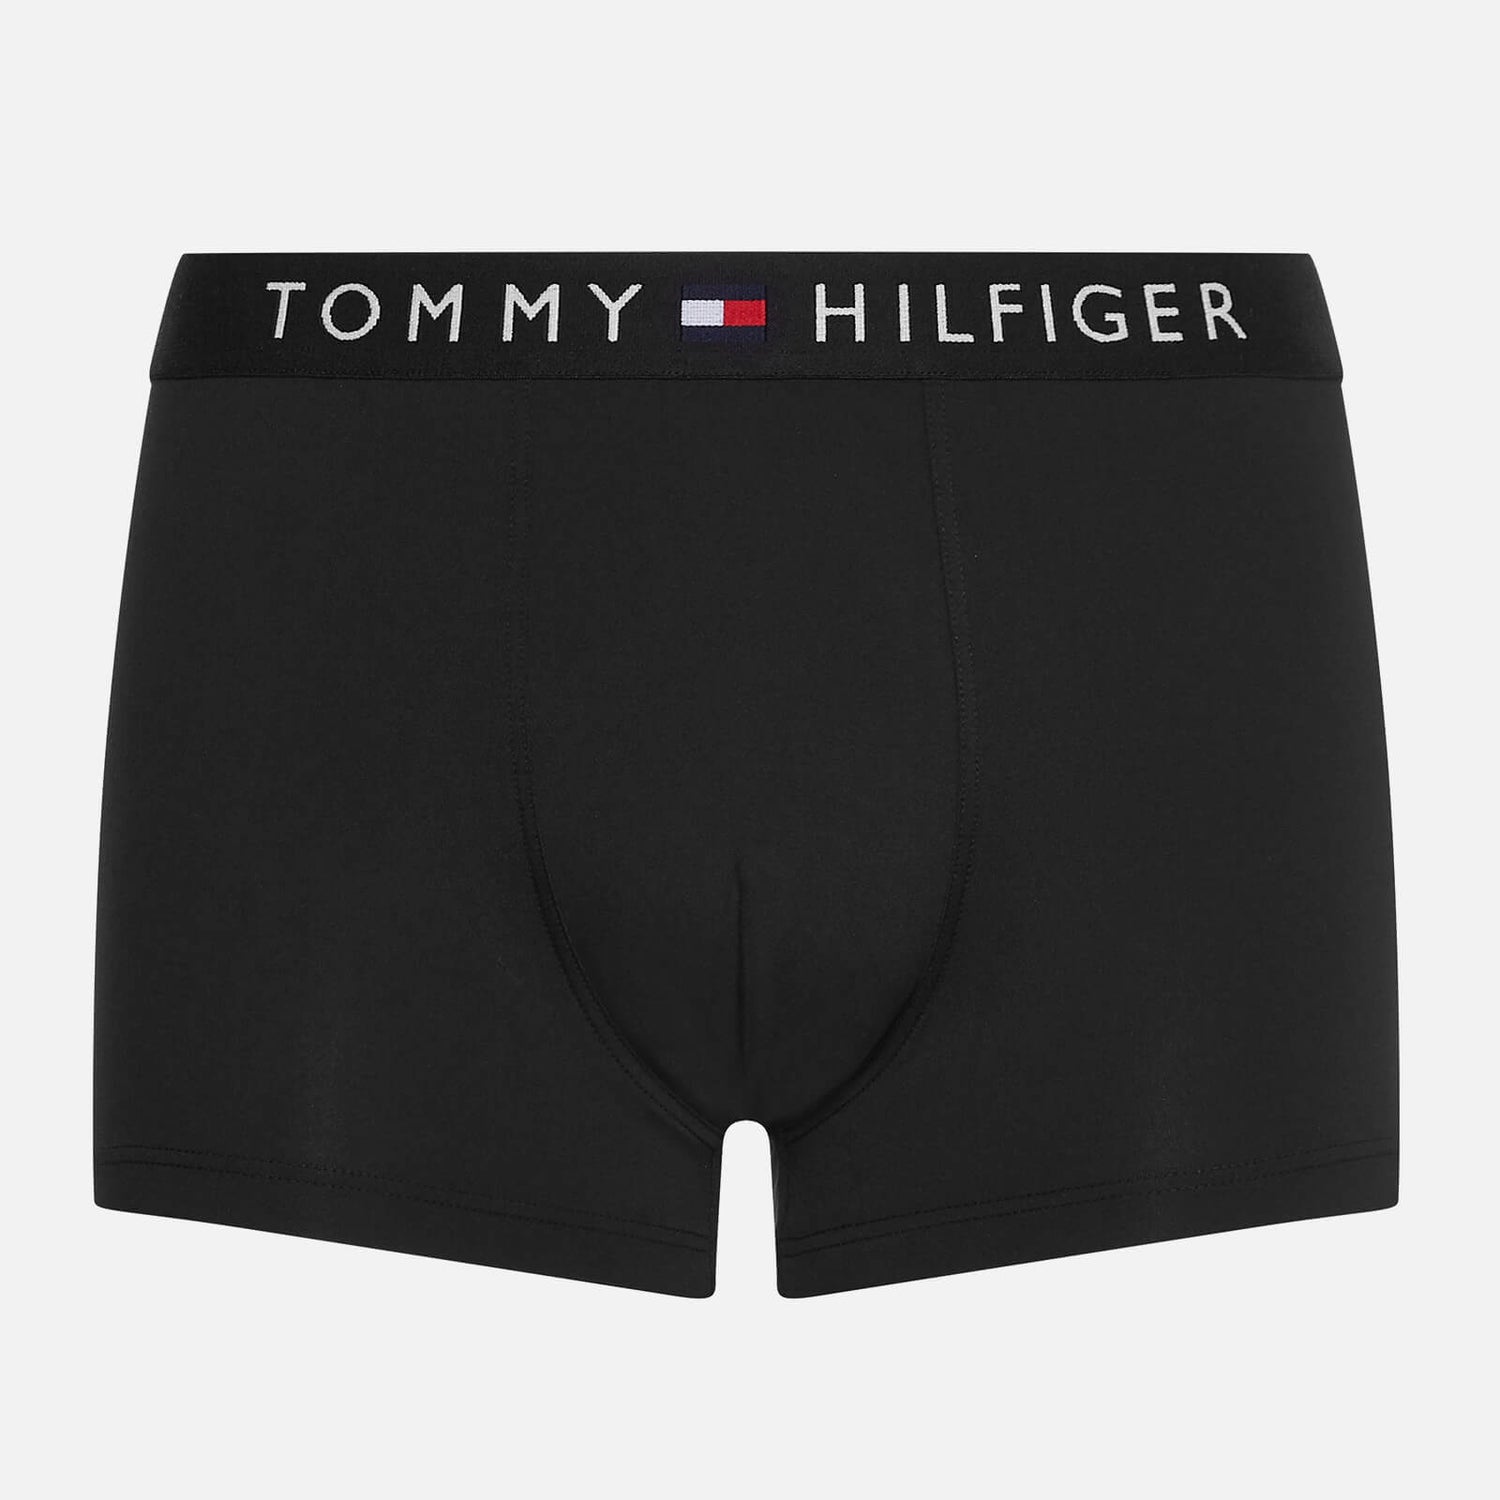 Tommy Hilfiger Men's Waistband Logo Trunks - Black - S